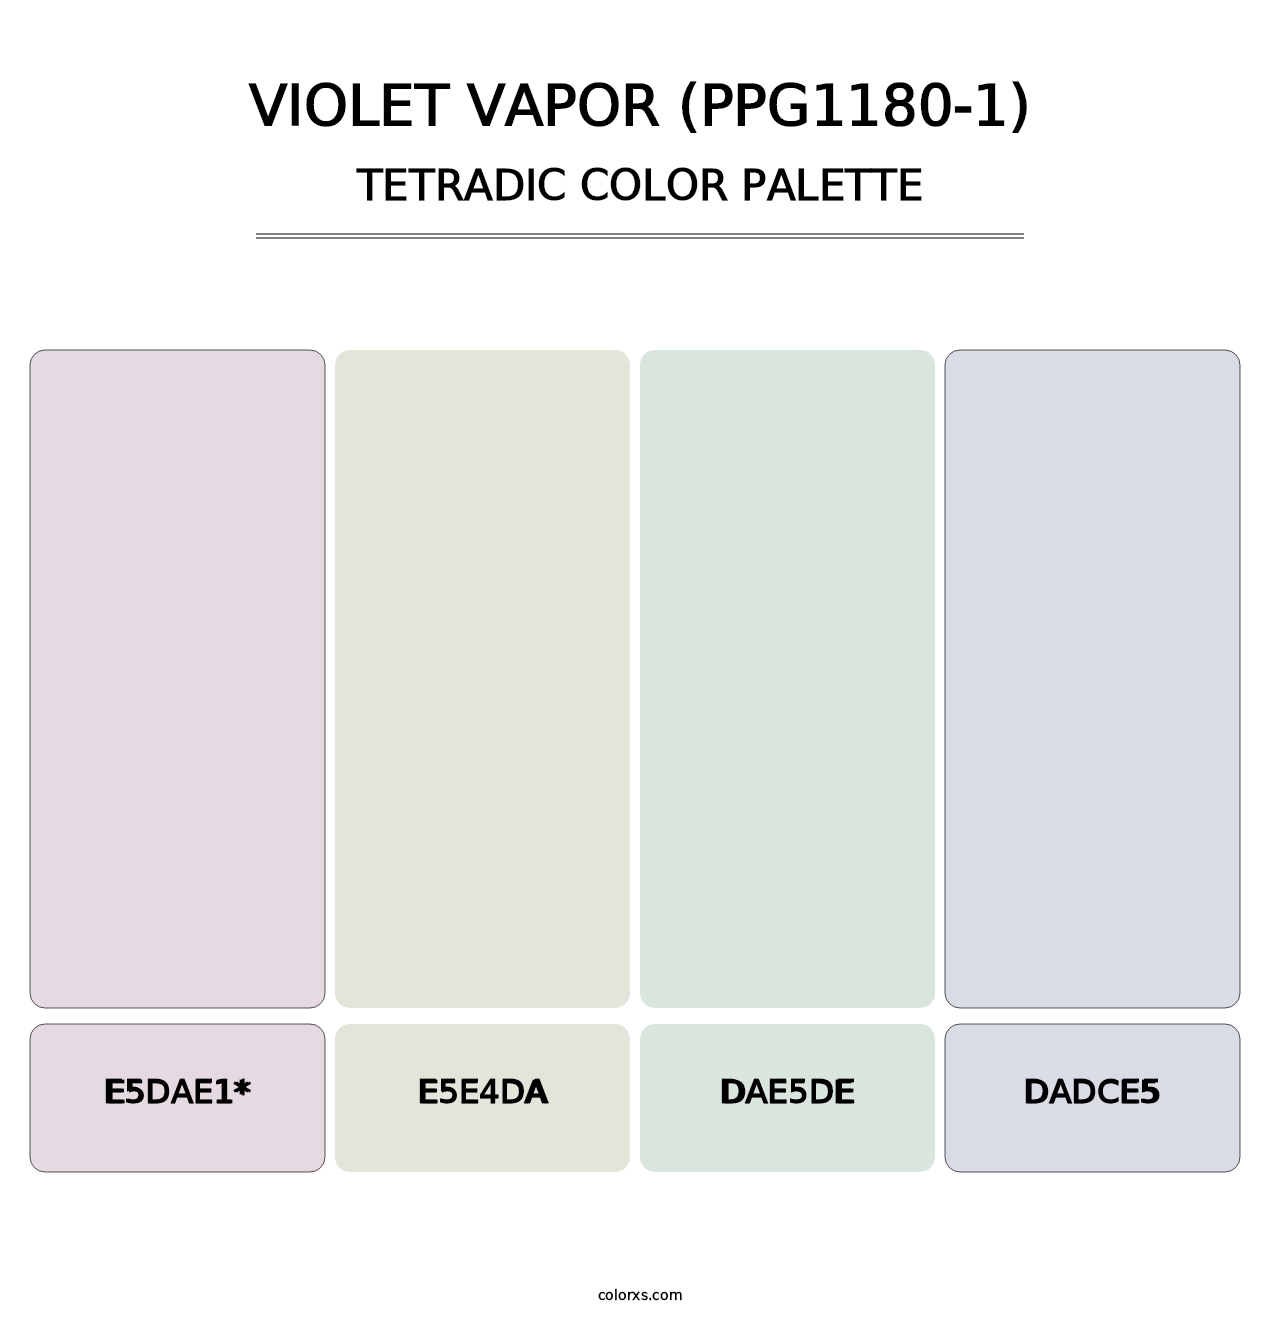 Violet Vapor (PPG1180-1) - Tetradic Color Palette